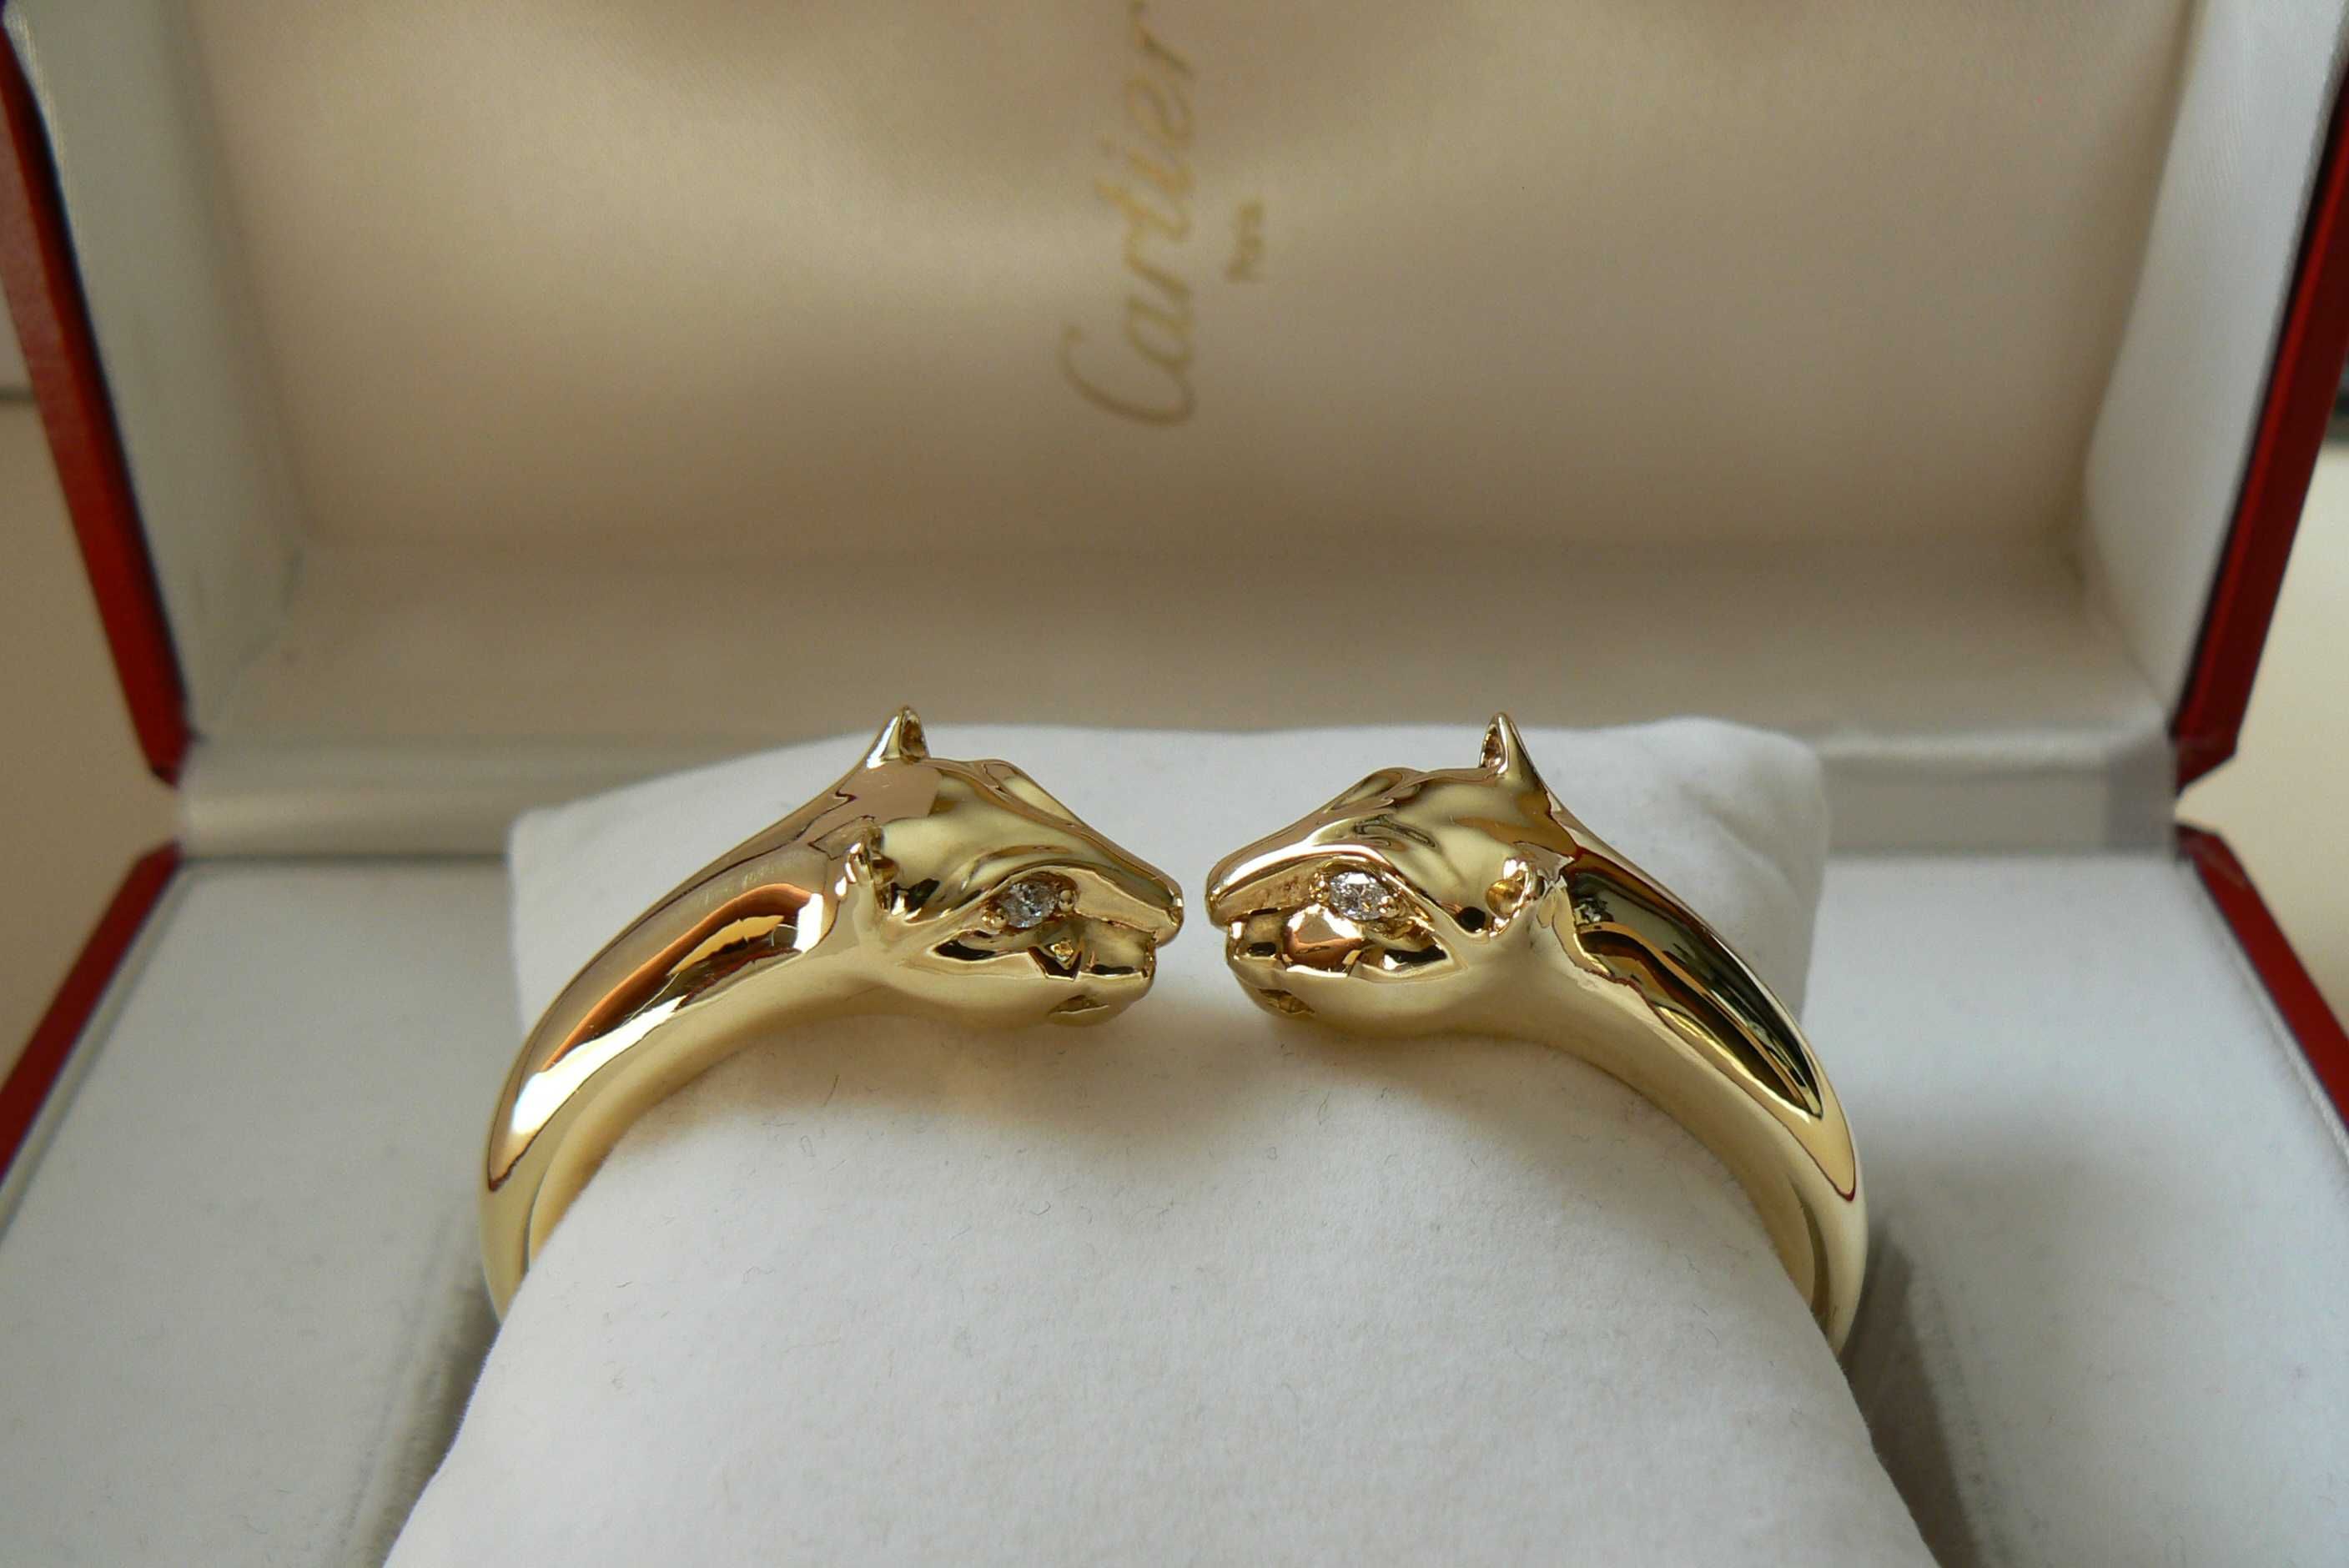 Cartier Panthere bransoletka gold 18K złoto 750